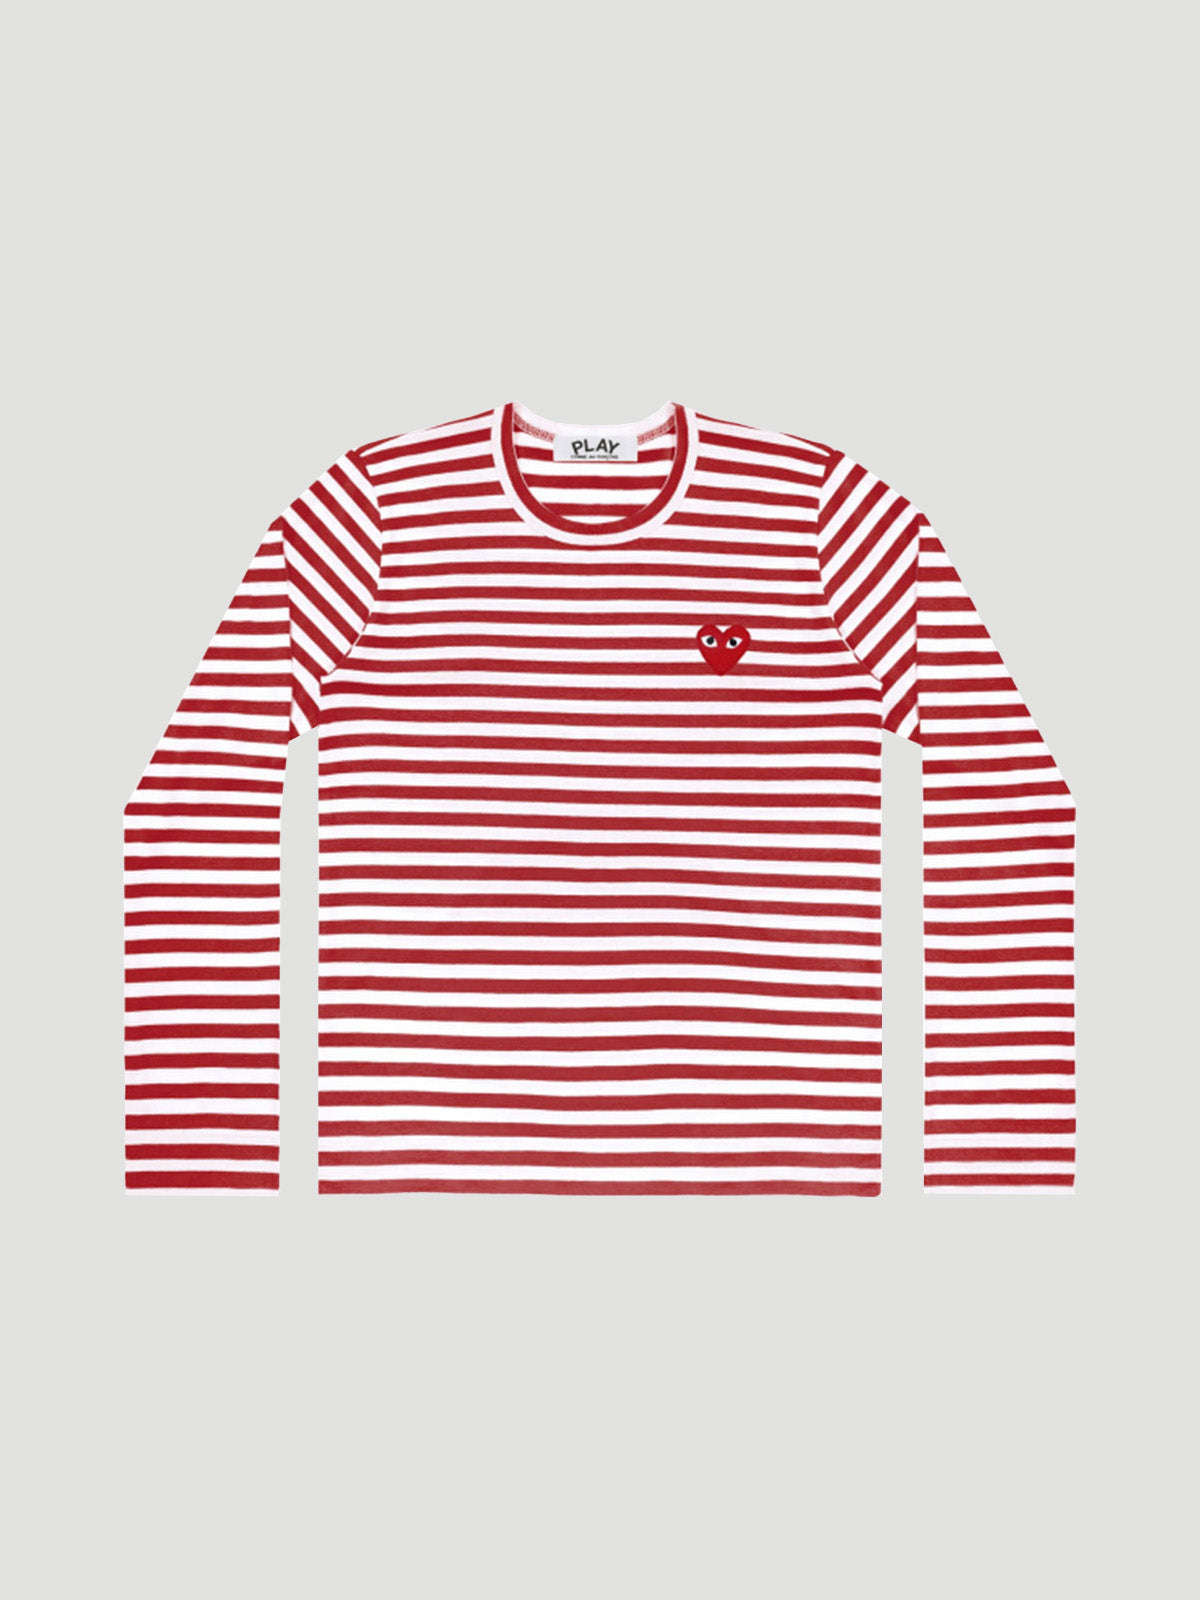 Play Comme des Garçons Ladies Striped T-Shirt - Red/White